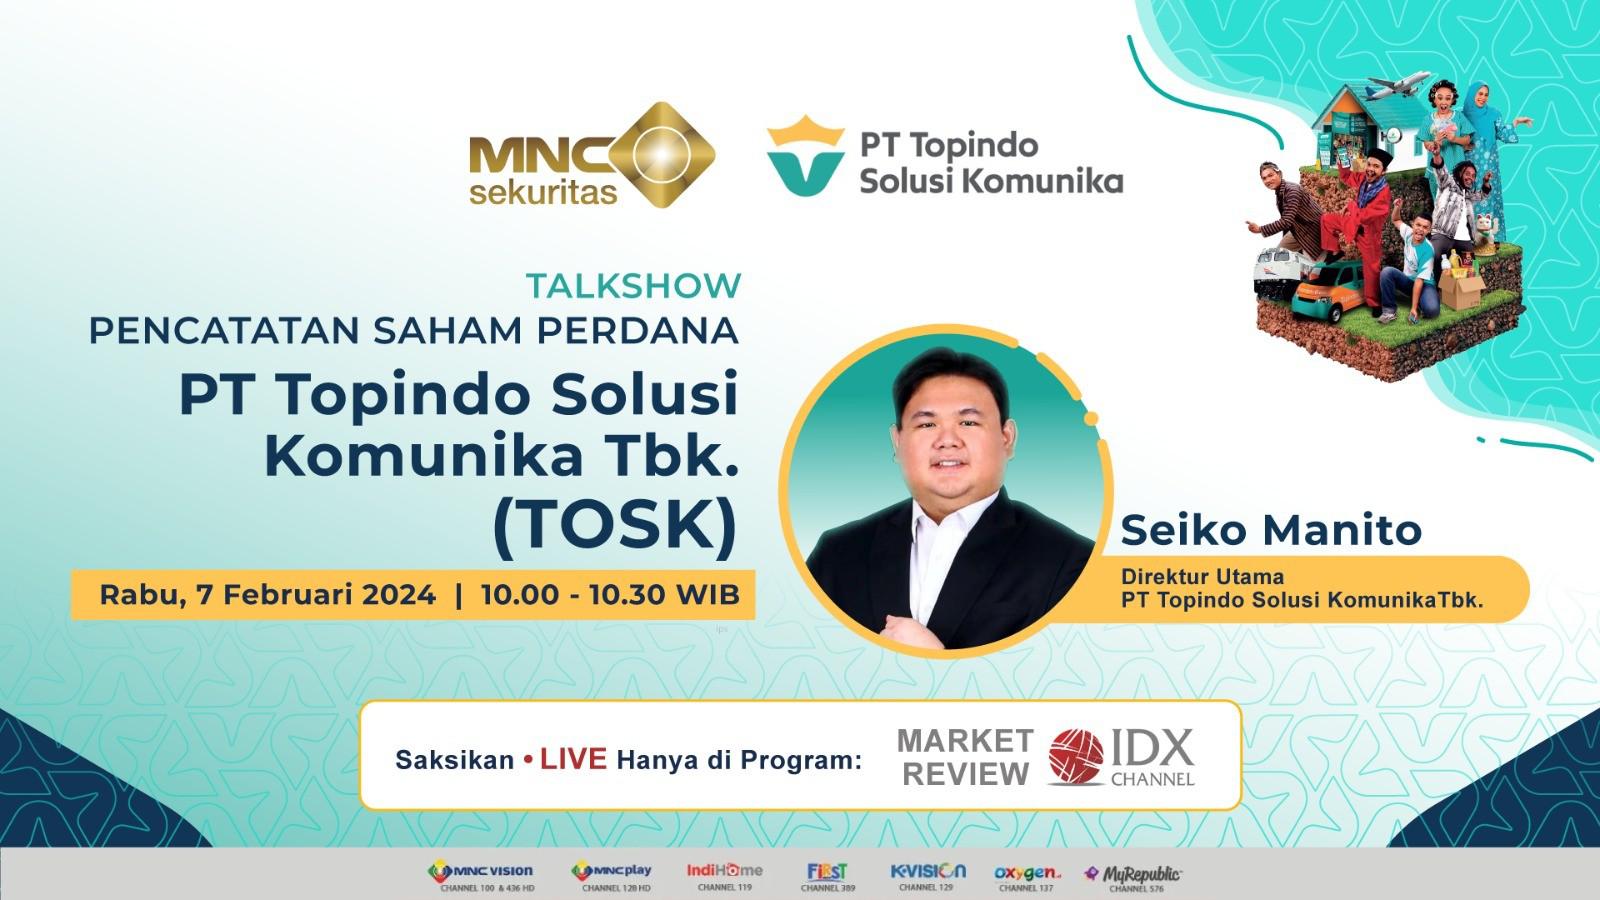 Simak Prospek Bisnis TOSK di Talkshow Market Review IDX Channel